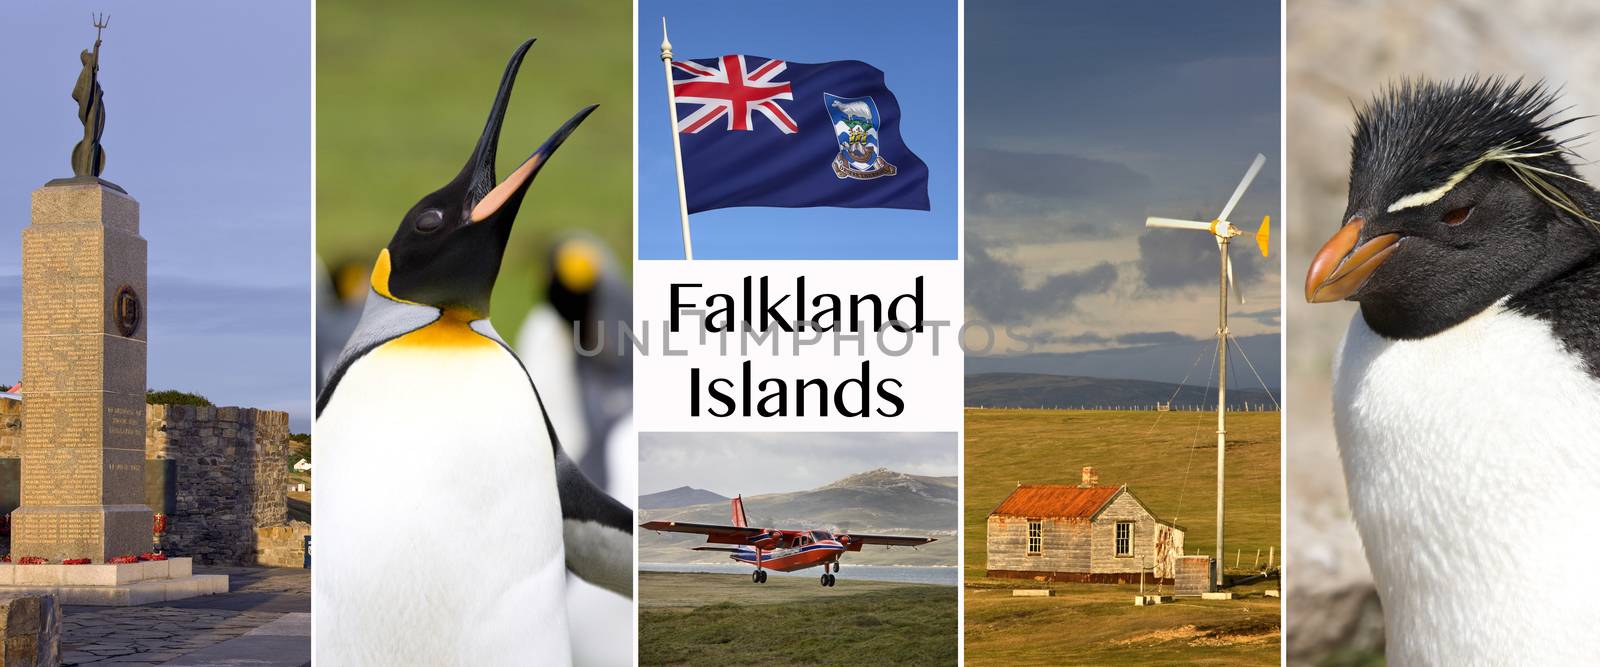 The Falkland Islands - Islas Malvinas.